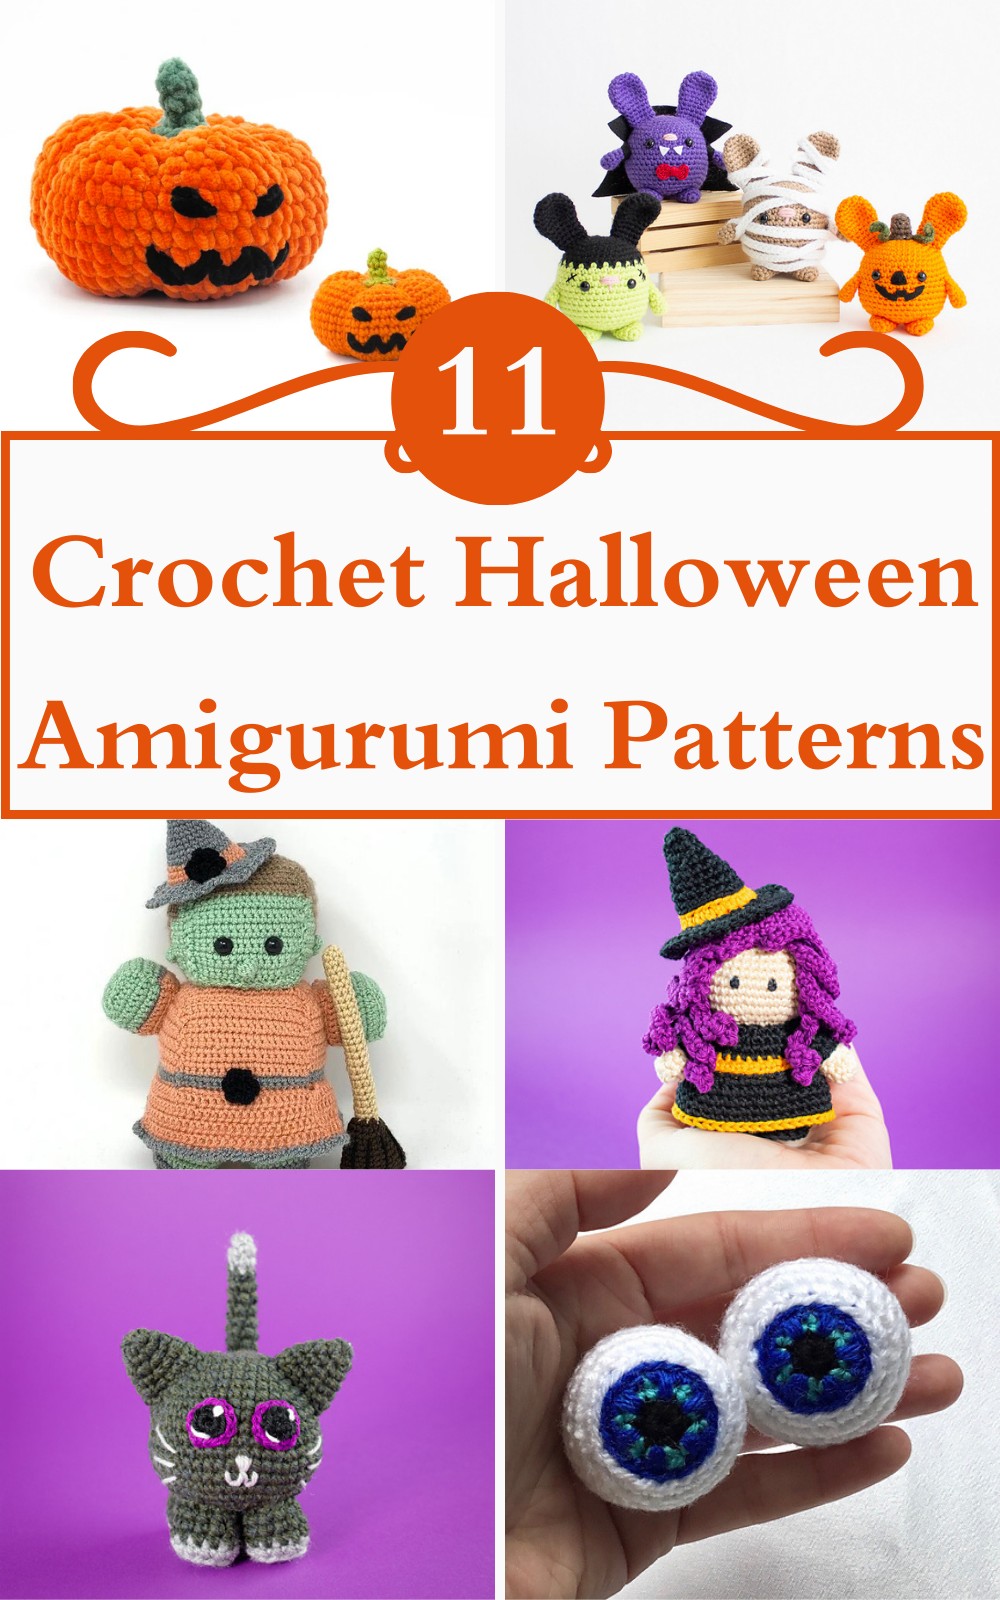 5 Free Crochet Halloween Amigurumi Patterns